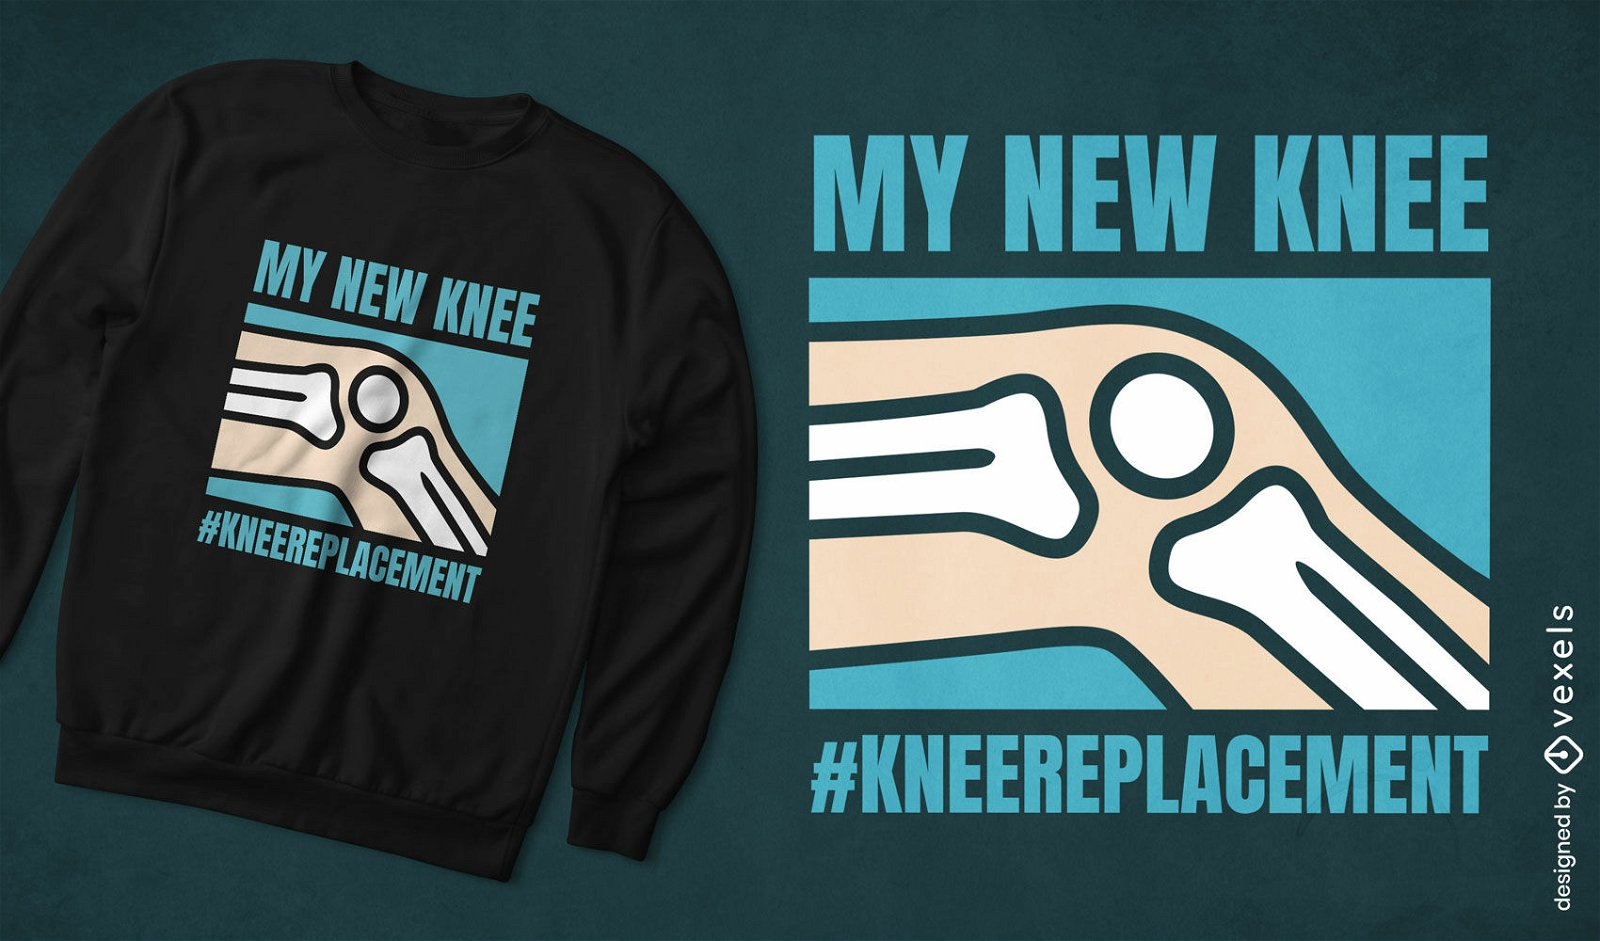 My new knee quote t-shirt design 